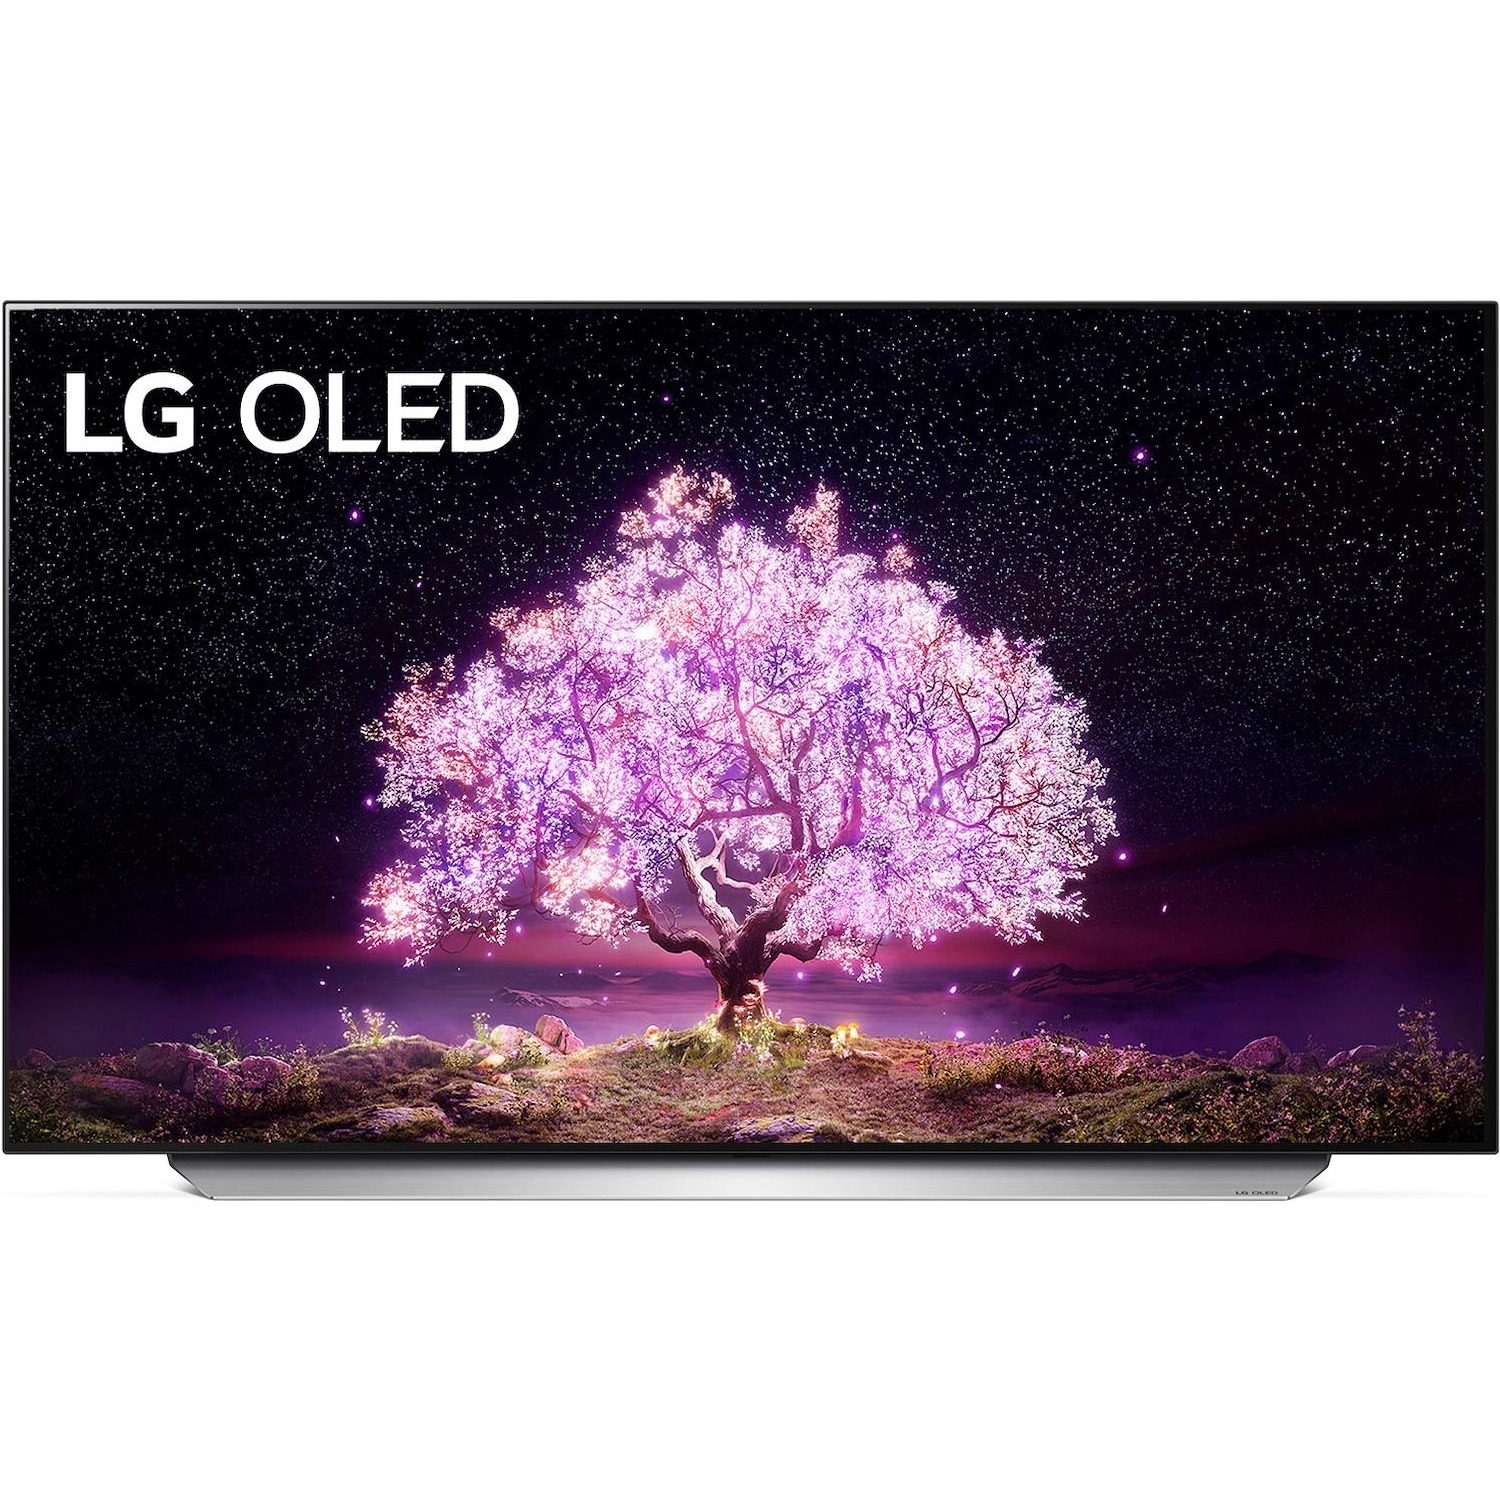 Immagine per TV OLED LG OLED48C16 Calibrato 4K e FULL HD da DIMOStore